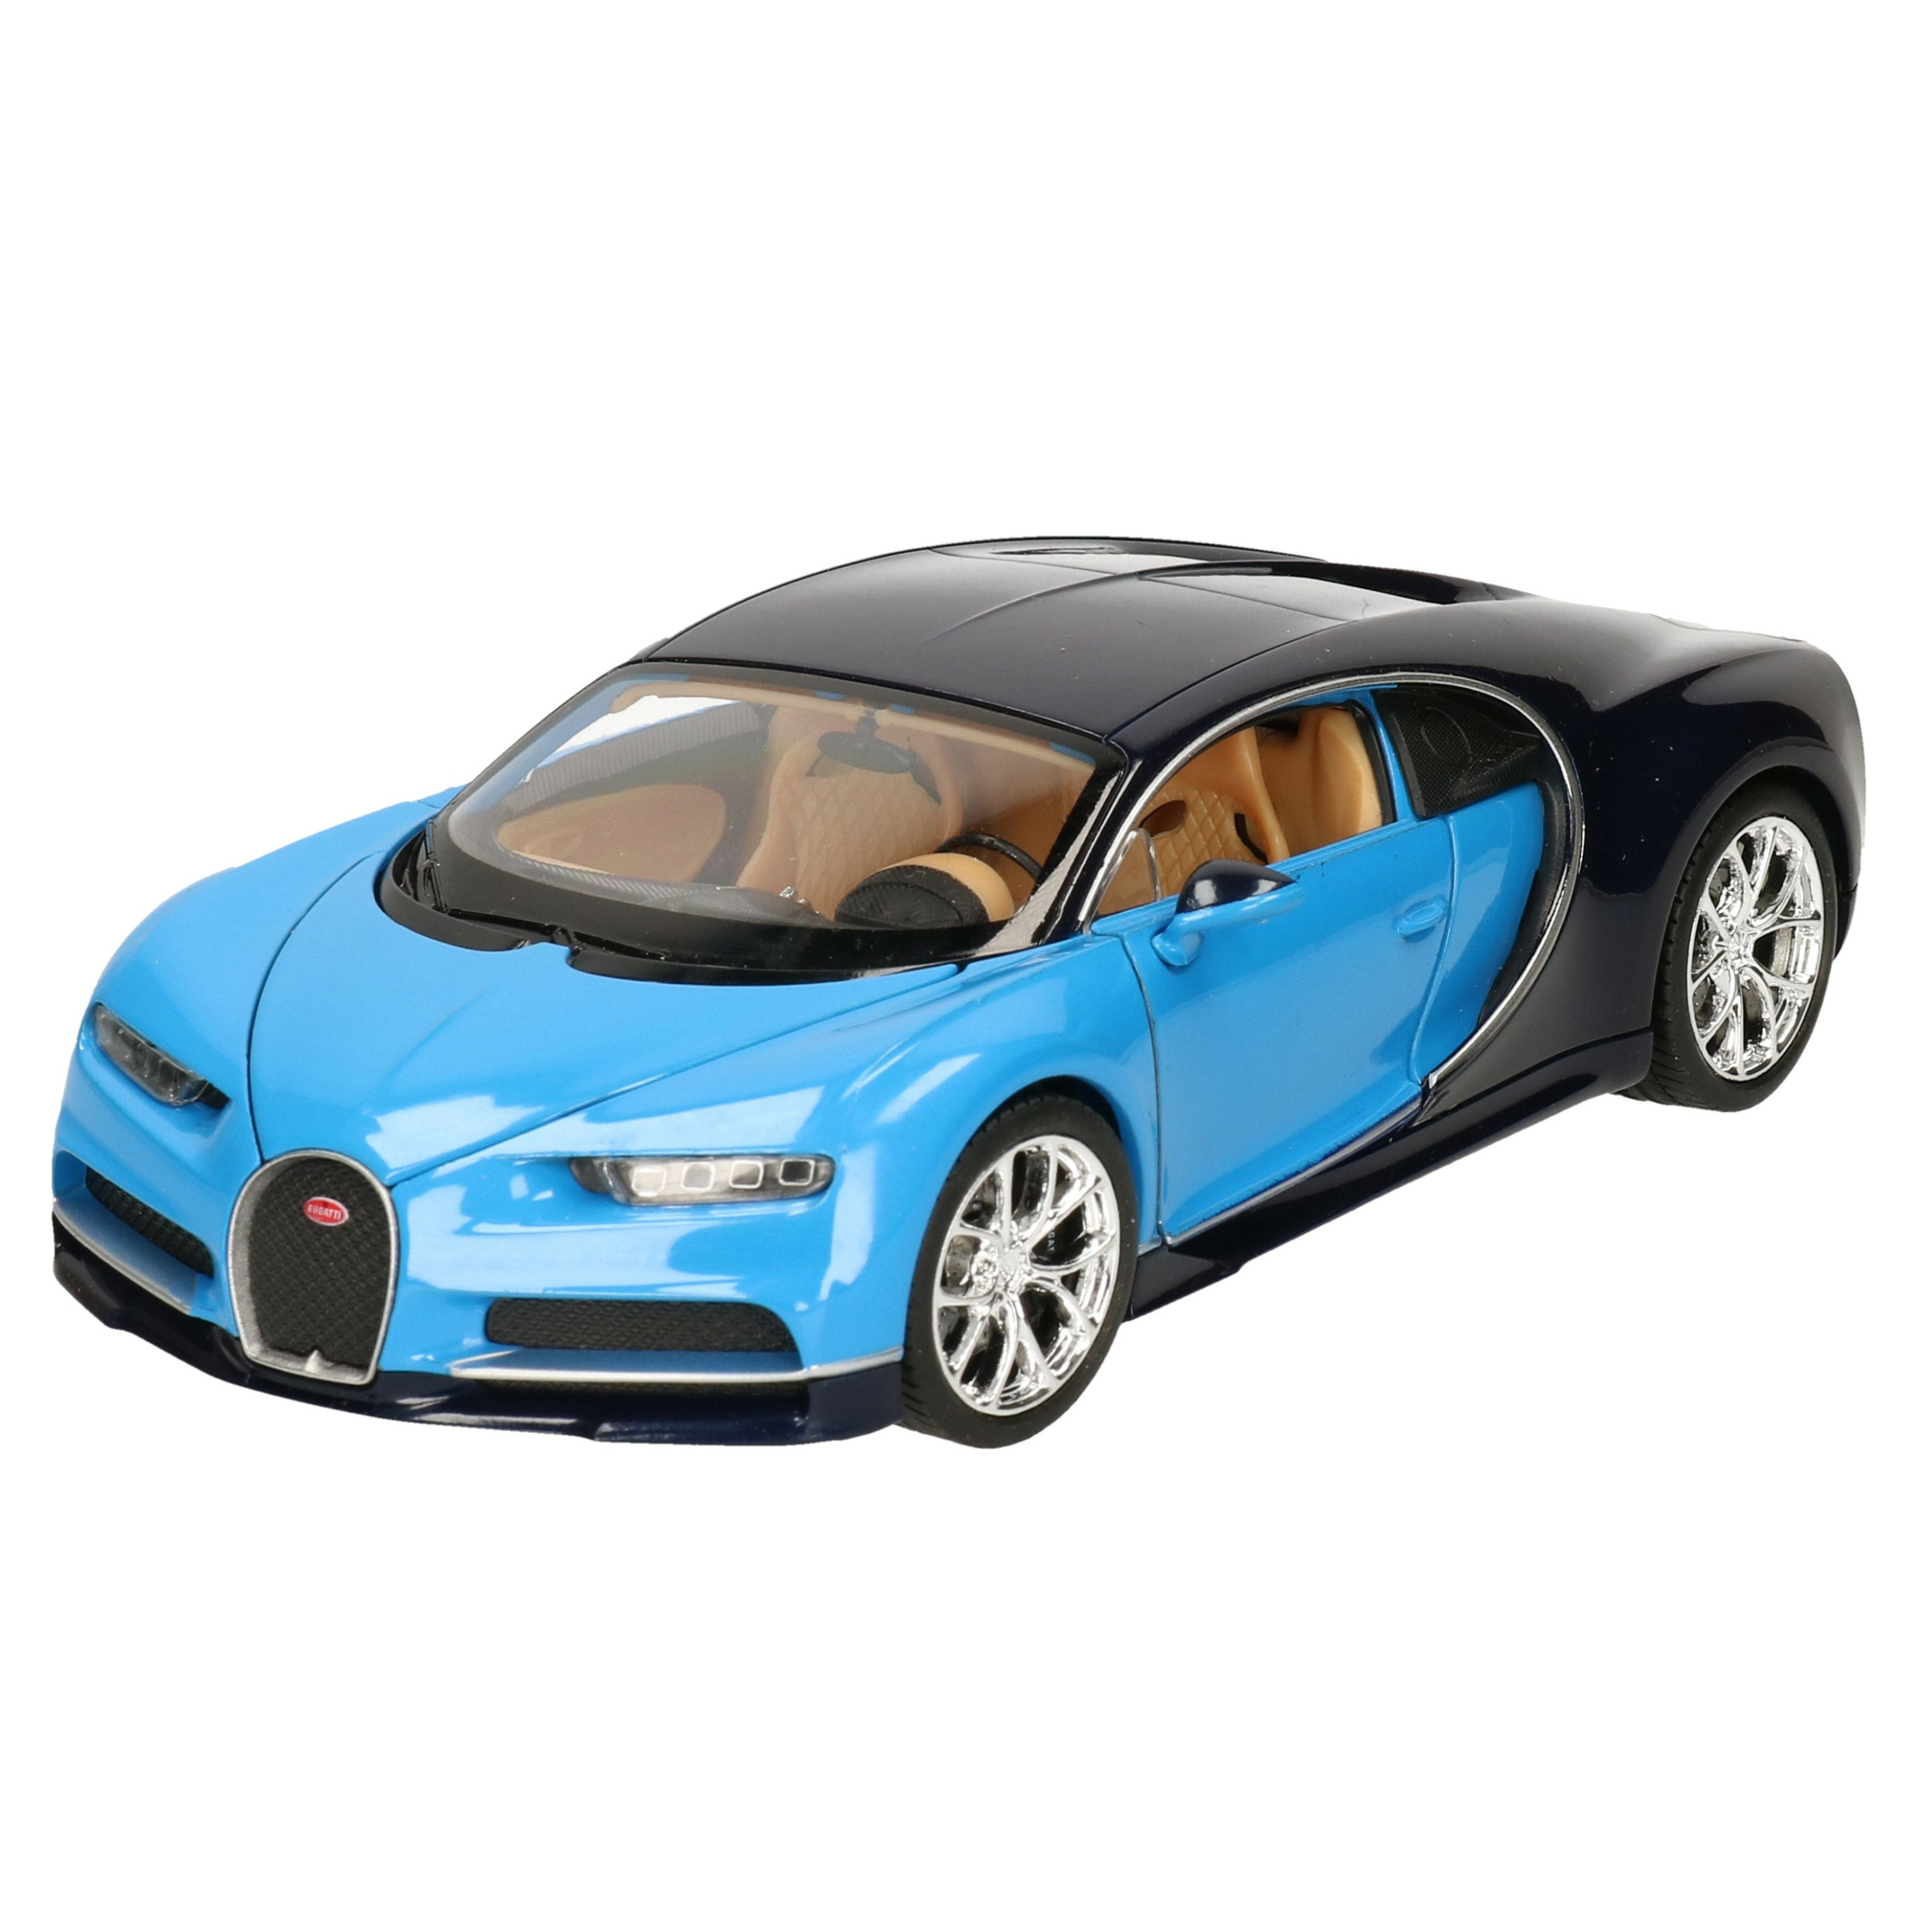 Modelauto-speelgoedauto Bugatti Chiron 2017 blauw schaal 1:24-19 x 8 x 5 cm